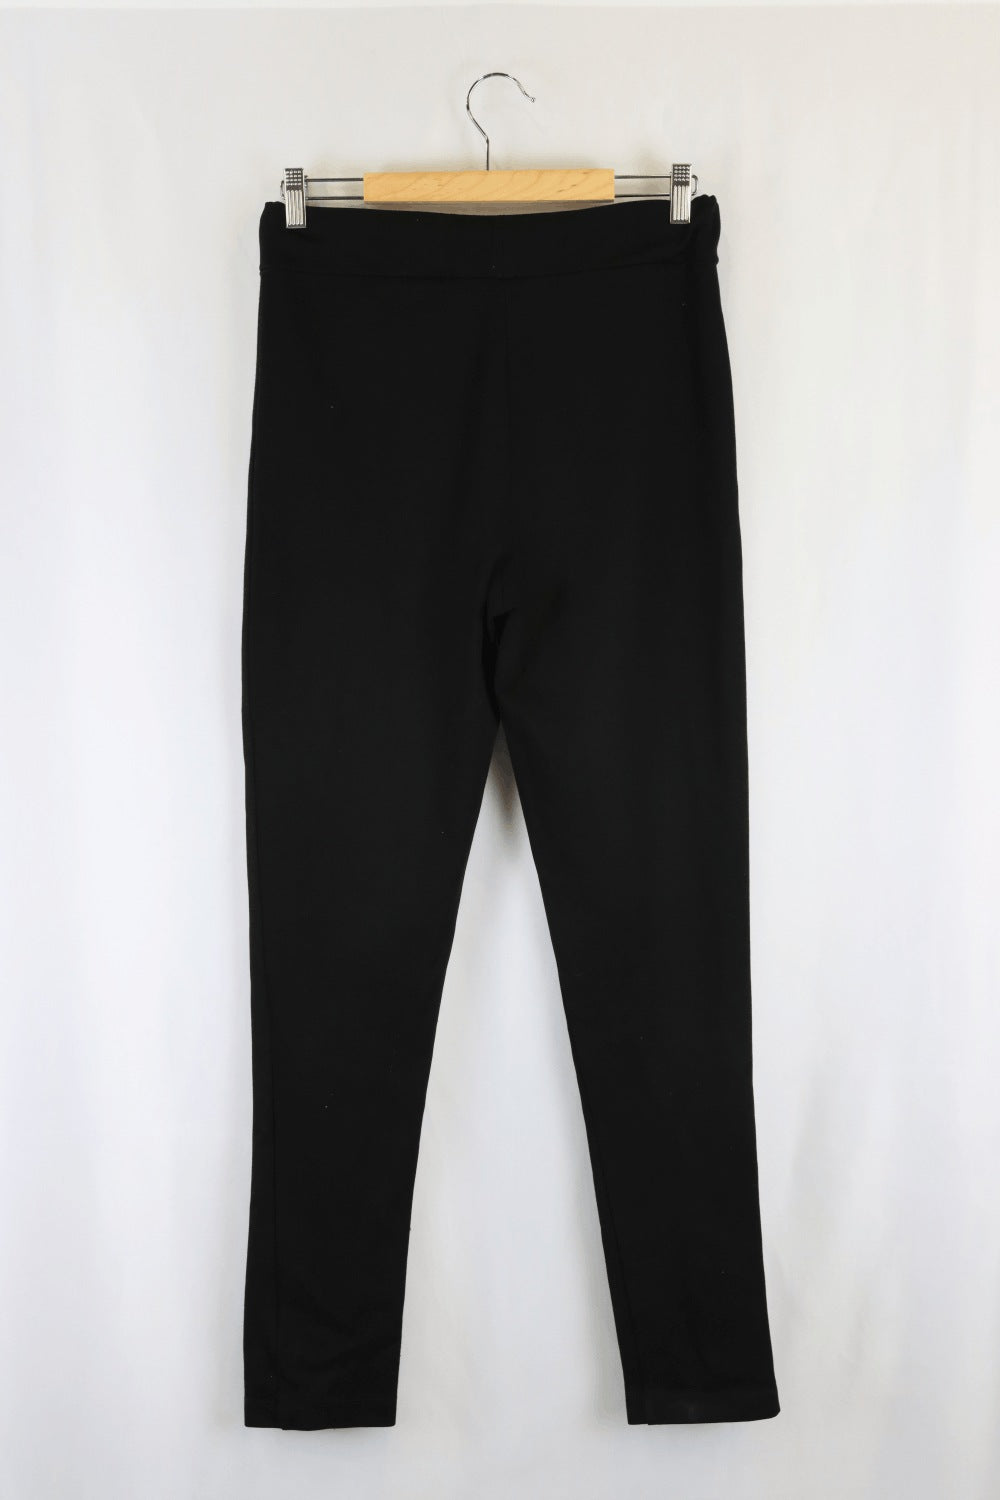 Saba Black Pants 12